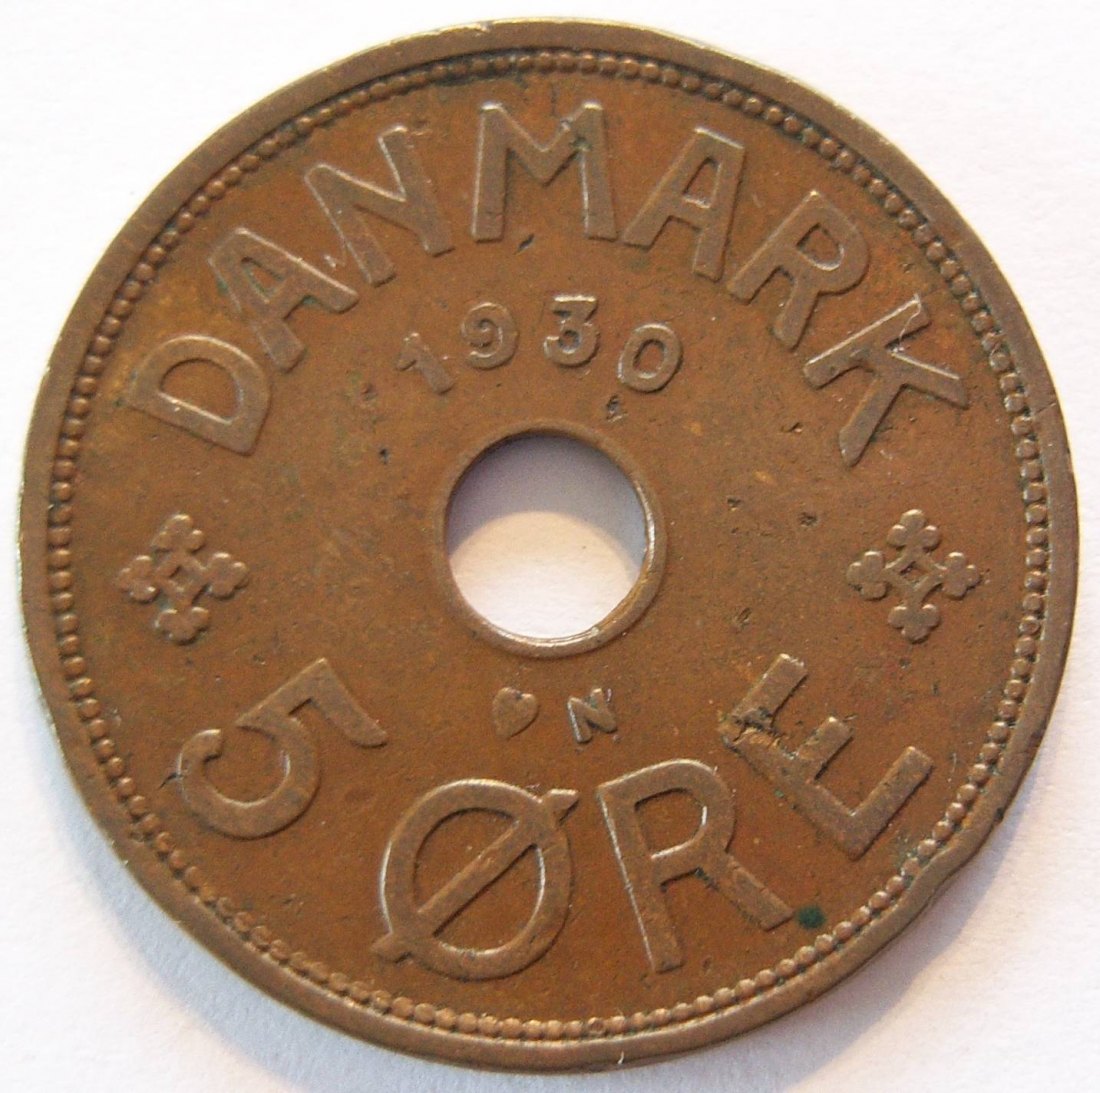  Dänemark 5 Öre 1930   